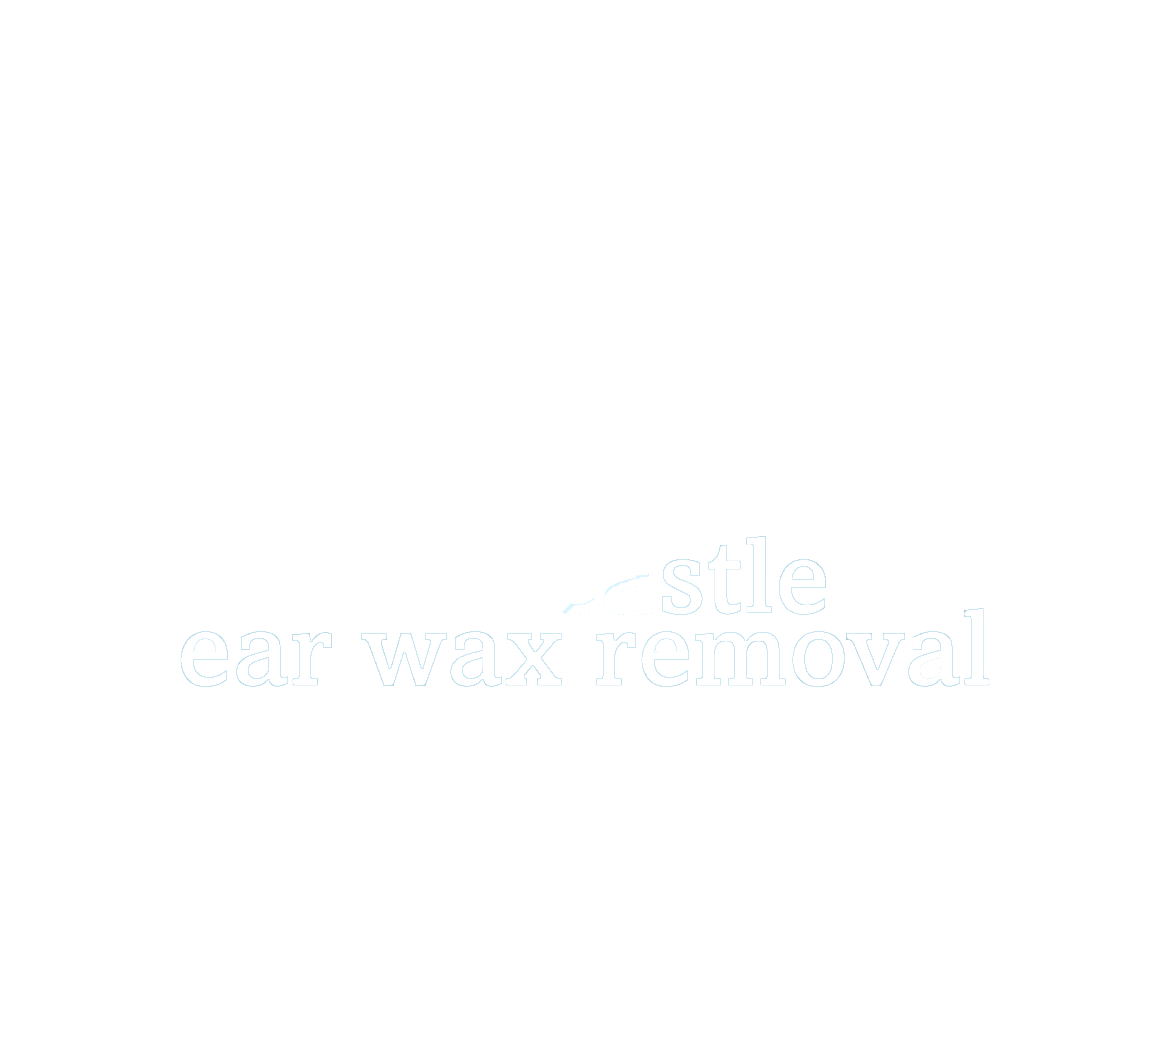 Newcastle Ear Wax Removal